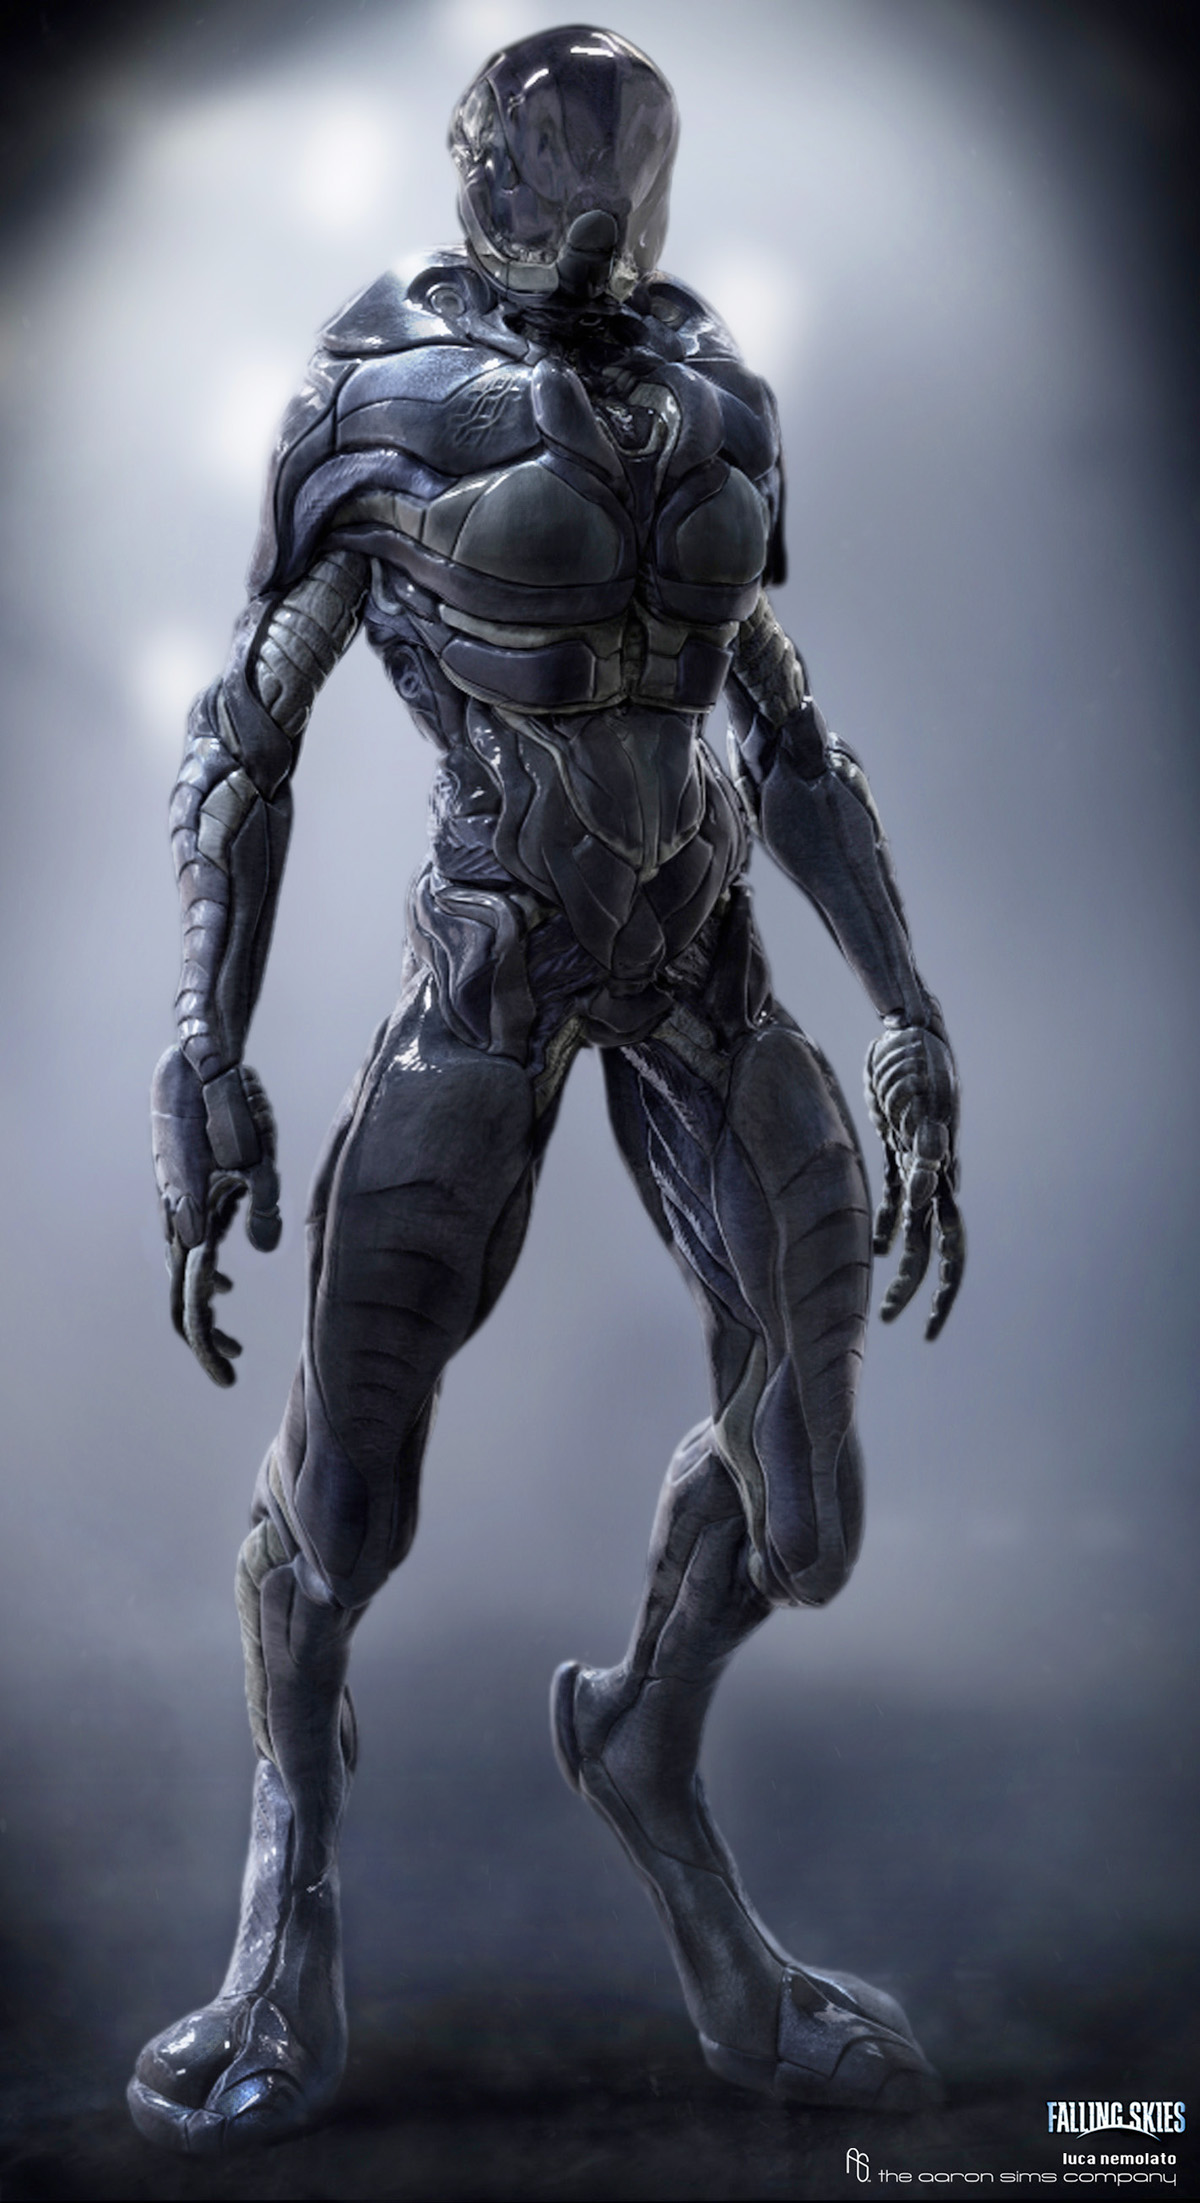 Falling skies season2 design character alien sci fi suit suit armor helmet